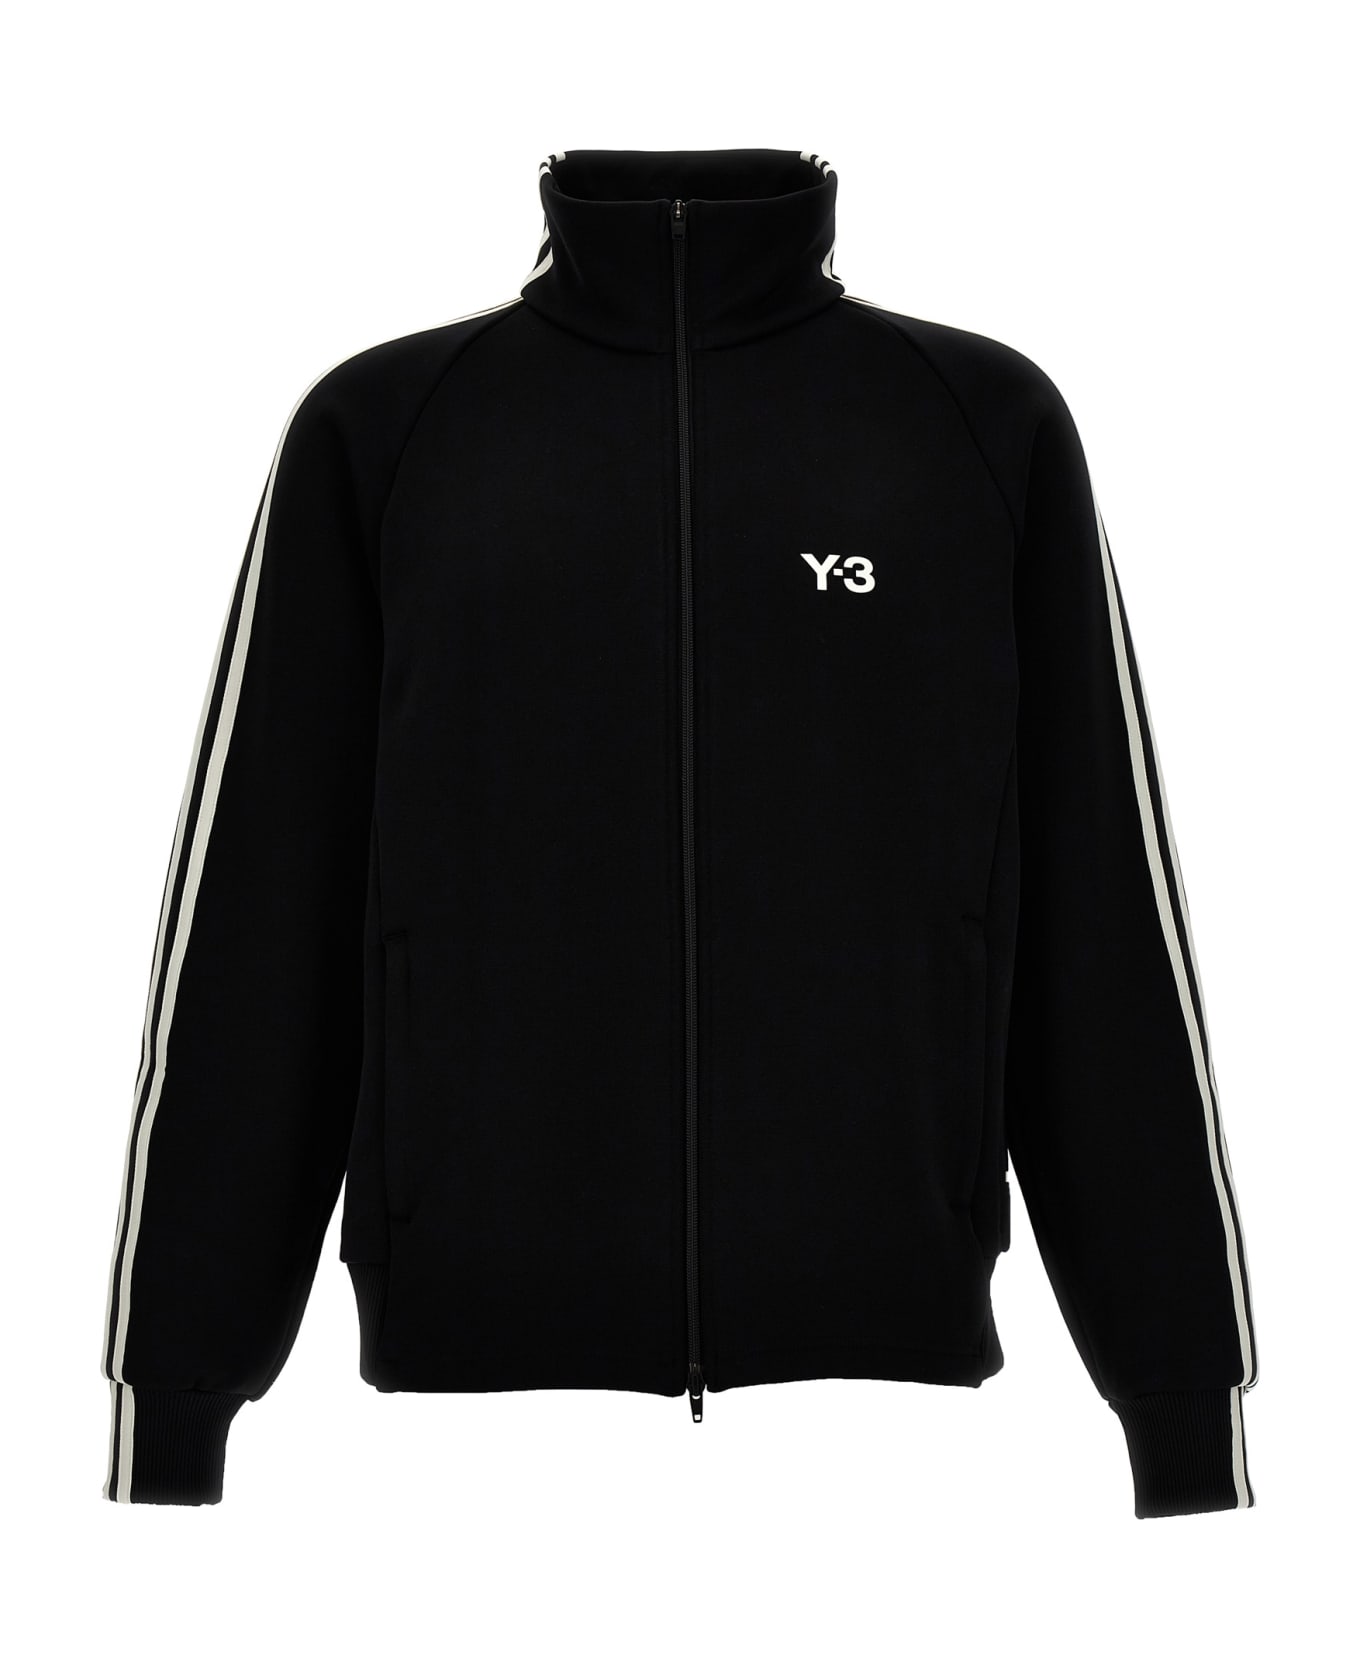 Y-3 Contrast Band Sweatshirt - White/Black ジャケット